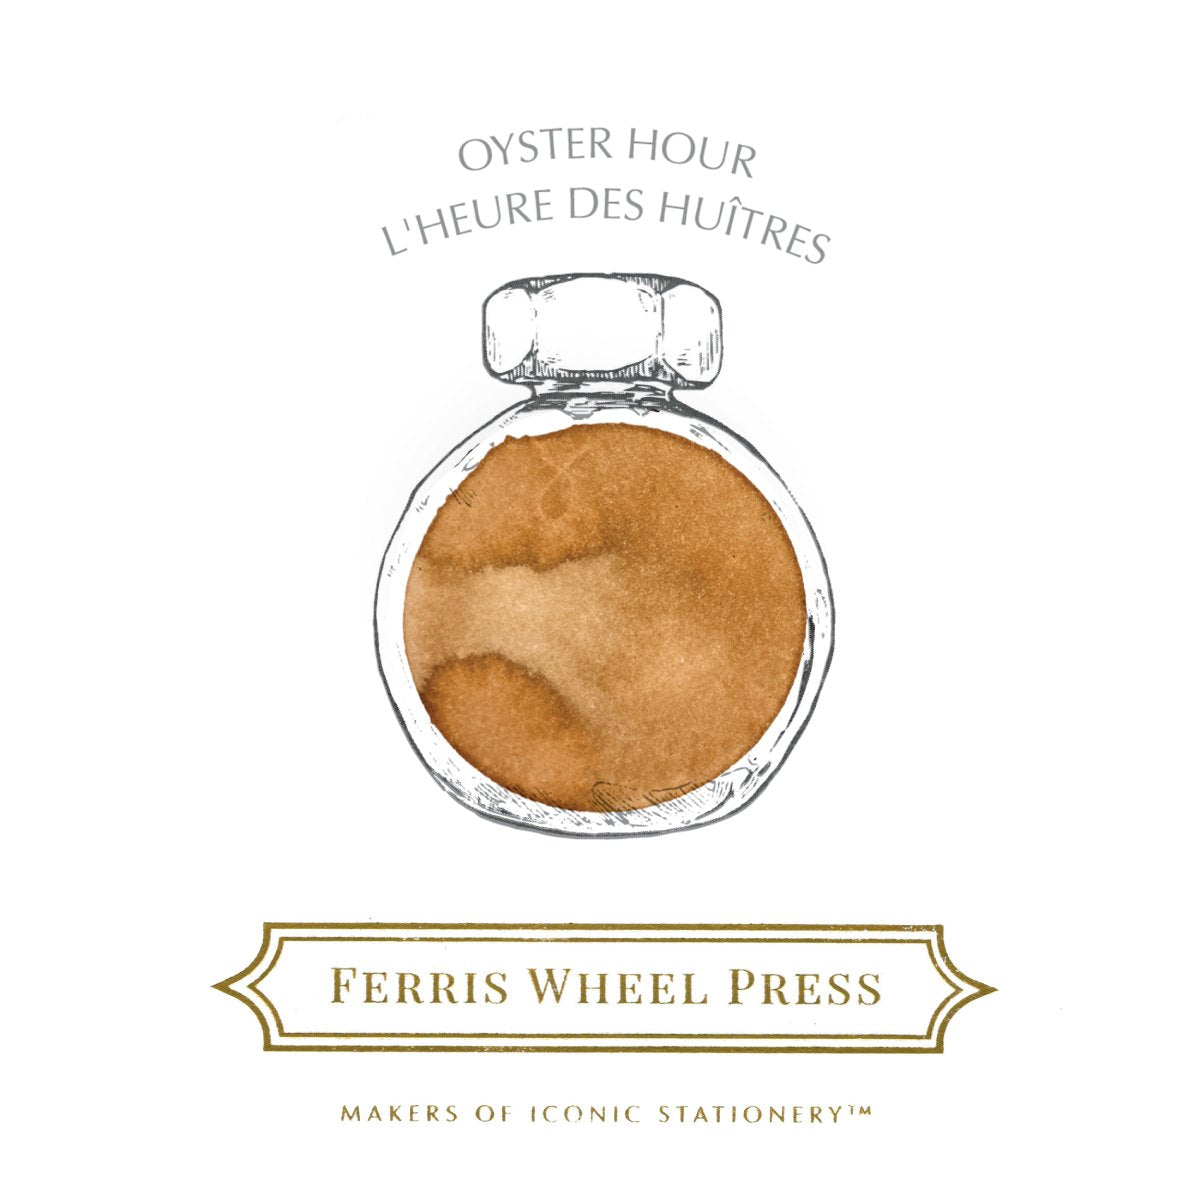 Ferris Wheel Press - Oyster Hour, 38 ml